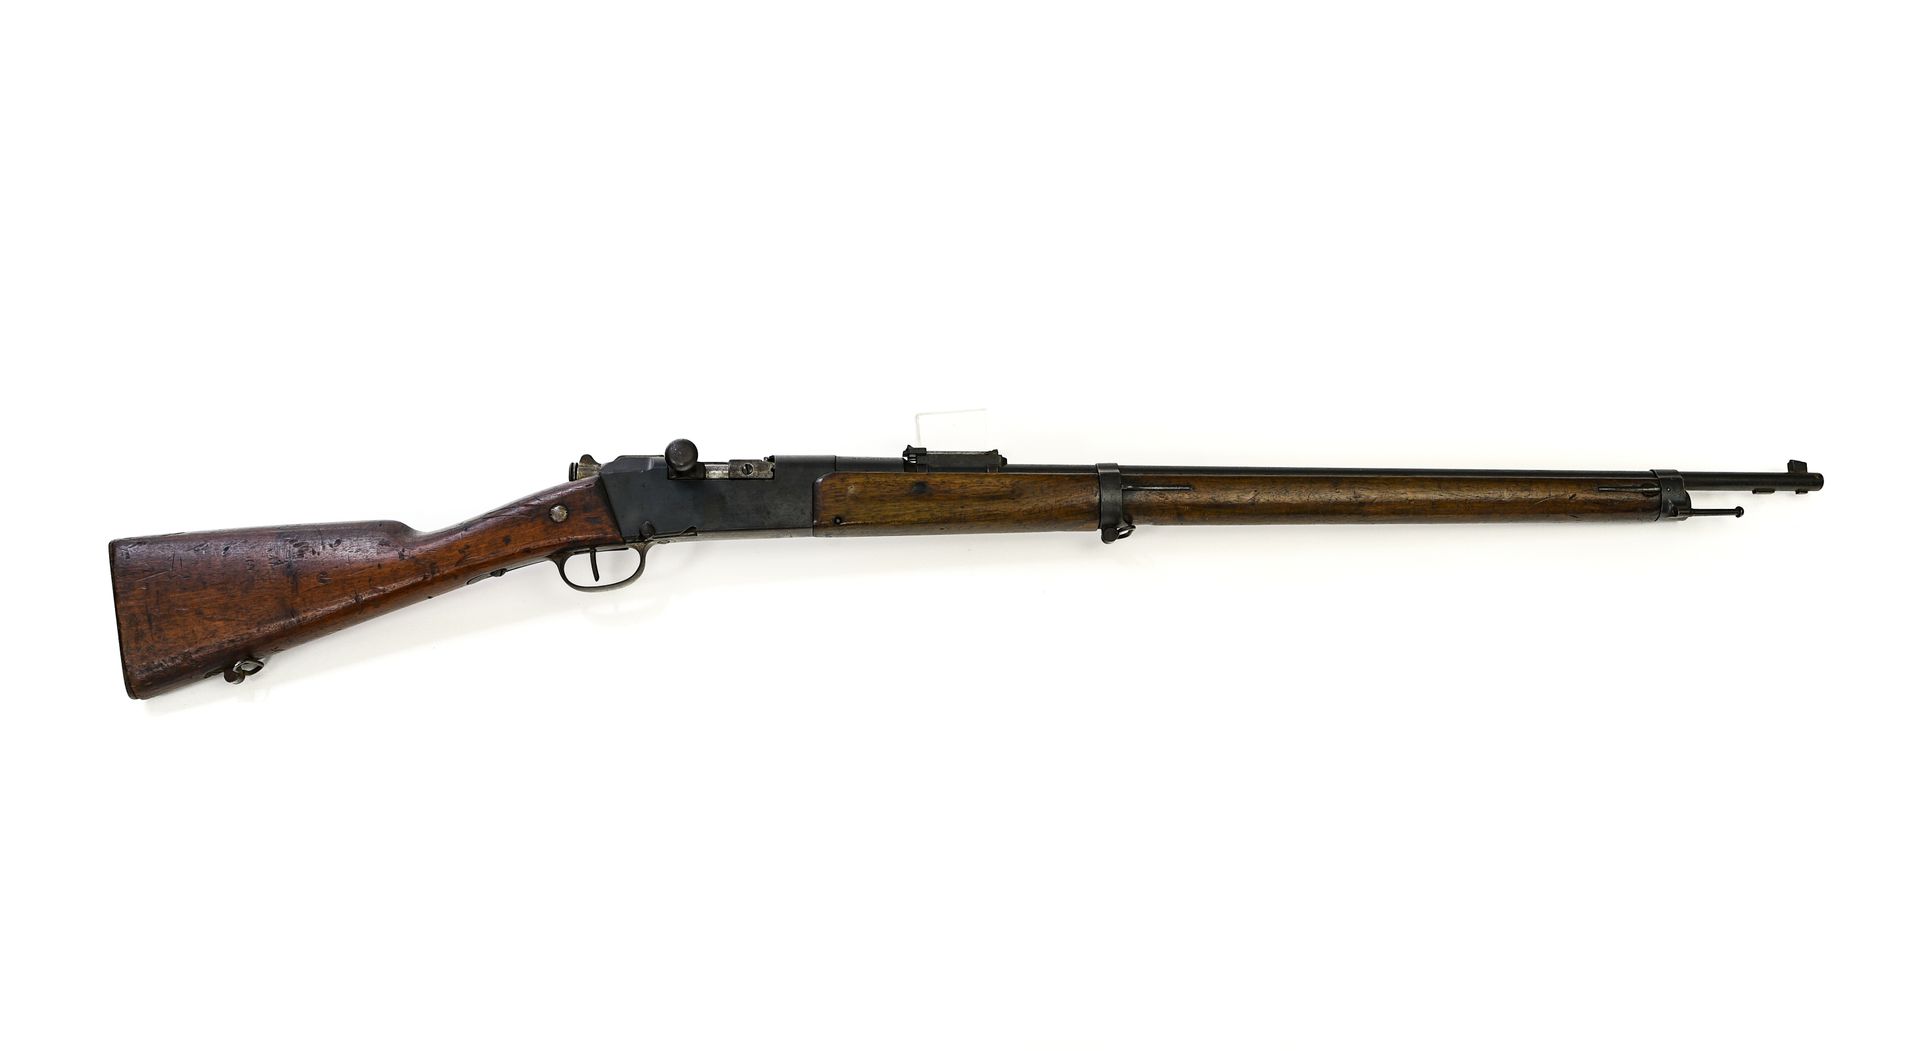 Fusil militaire LEBEL 1886 modifié 1893 FRANCE

1886 LEBEL military musket modif&hellip;